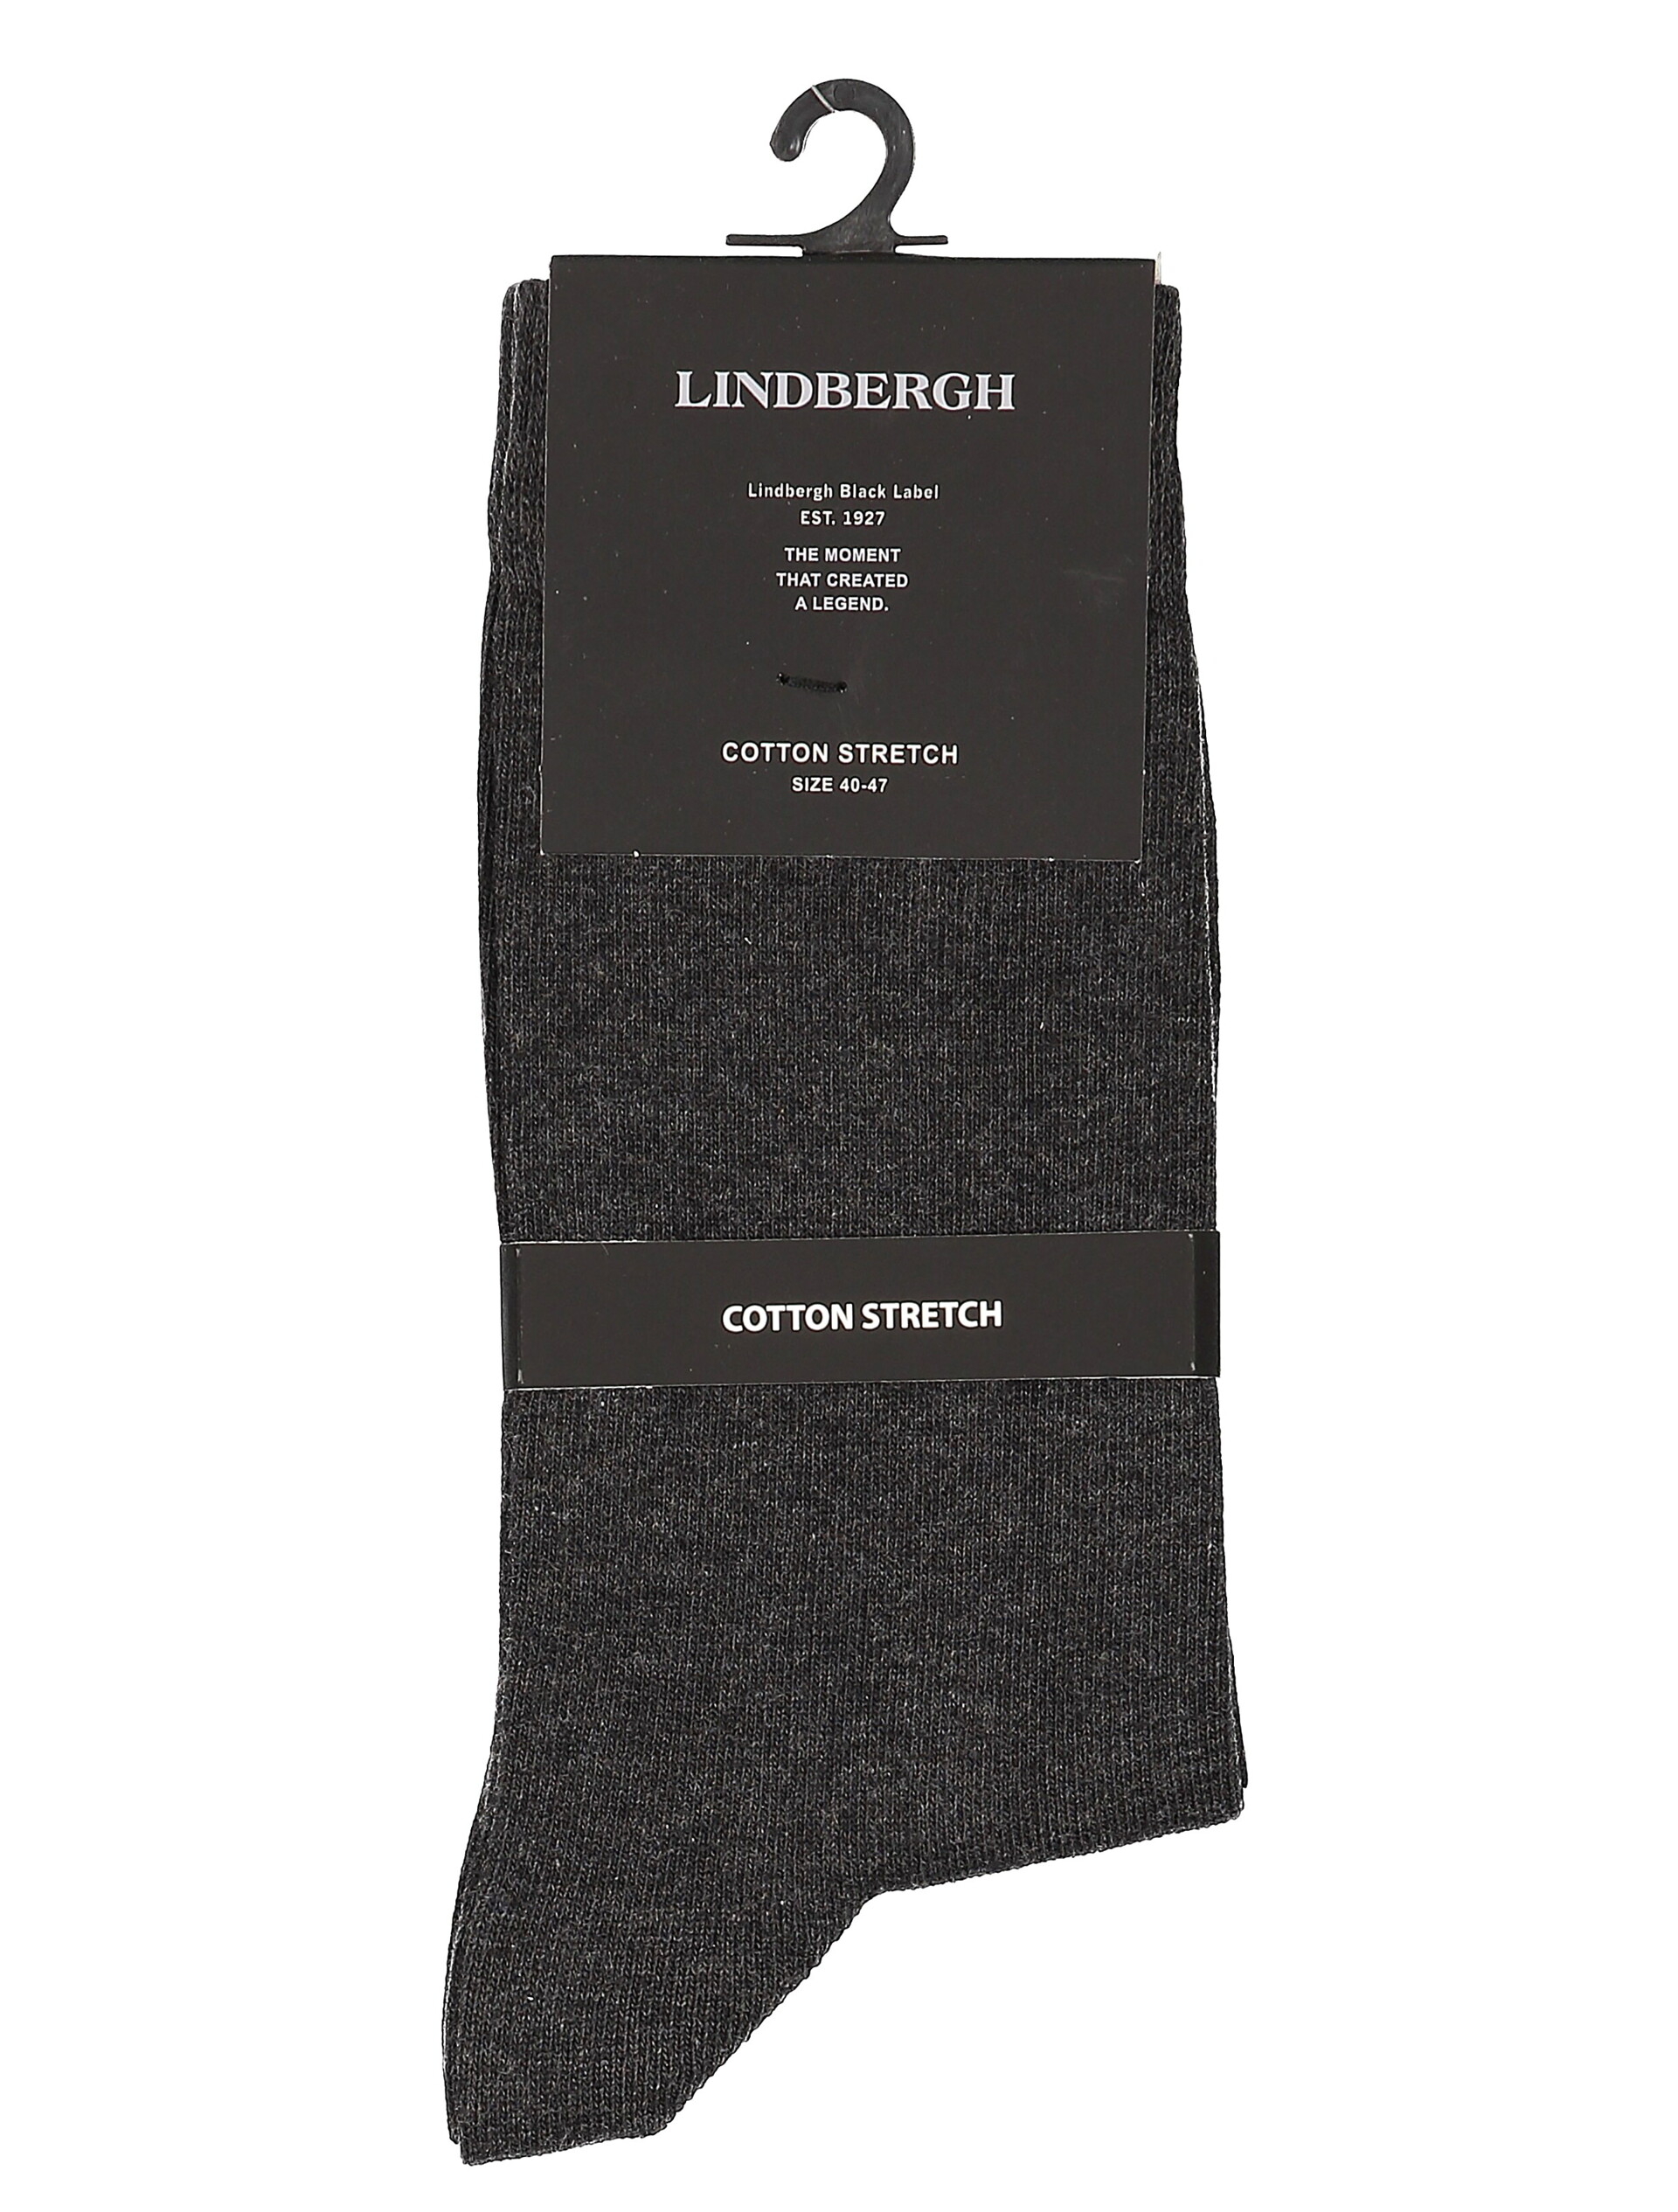 Lindbergh Socks grey / charcoal